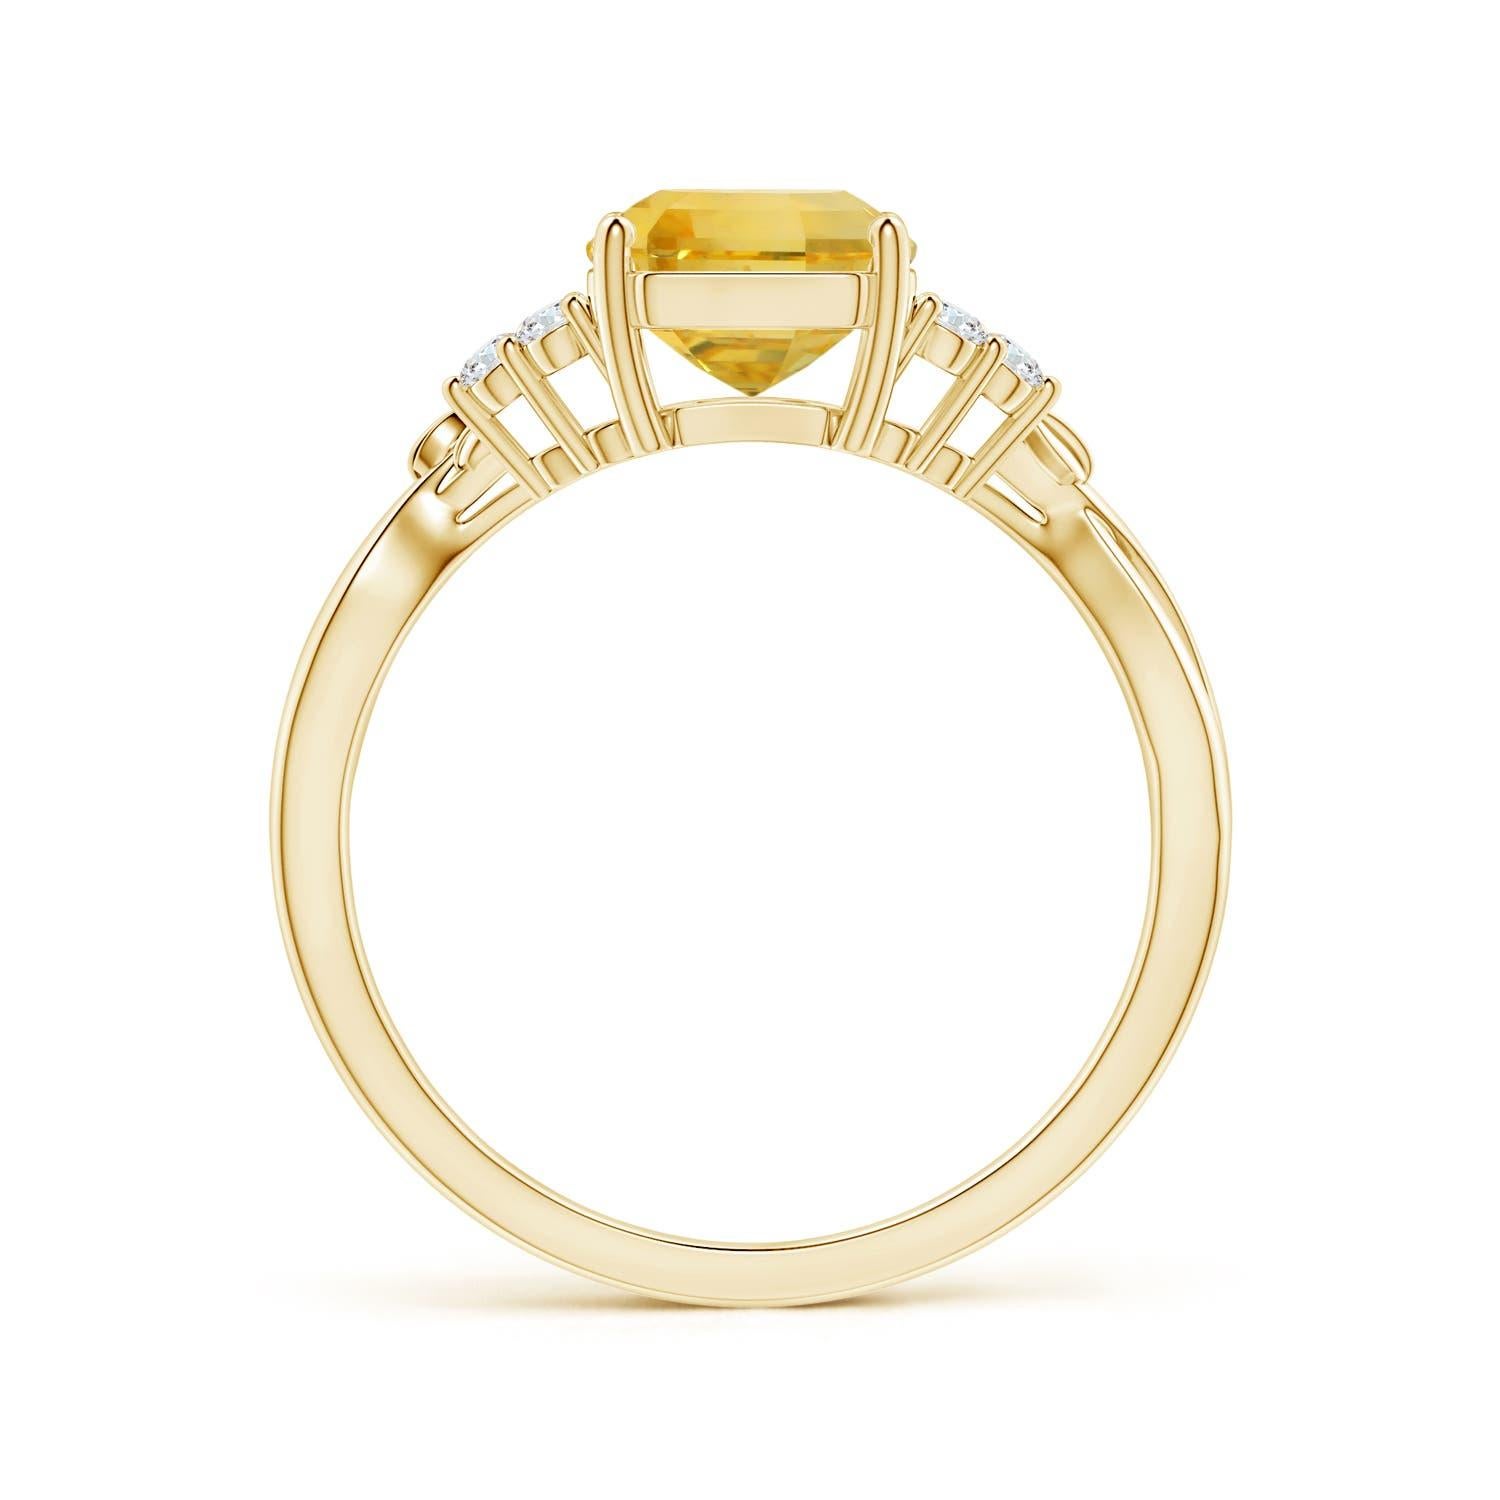 For Sale:  Angara Gia Certified Emerald-Cut Yellow Sapphire & Diamond Ring in Yellow Gold  2